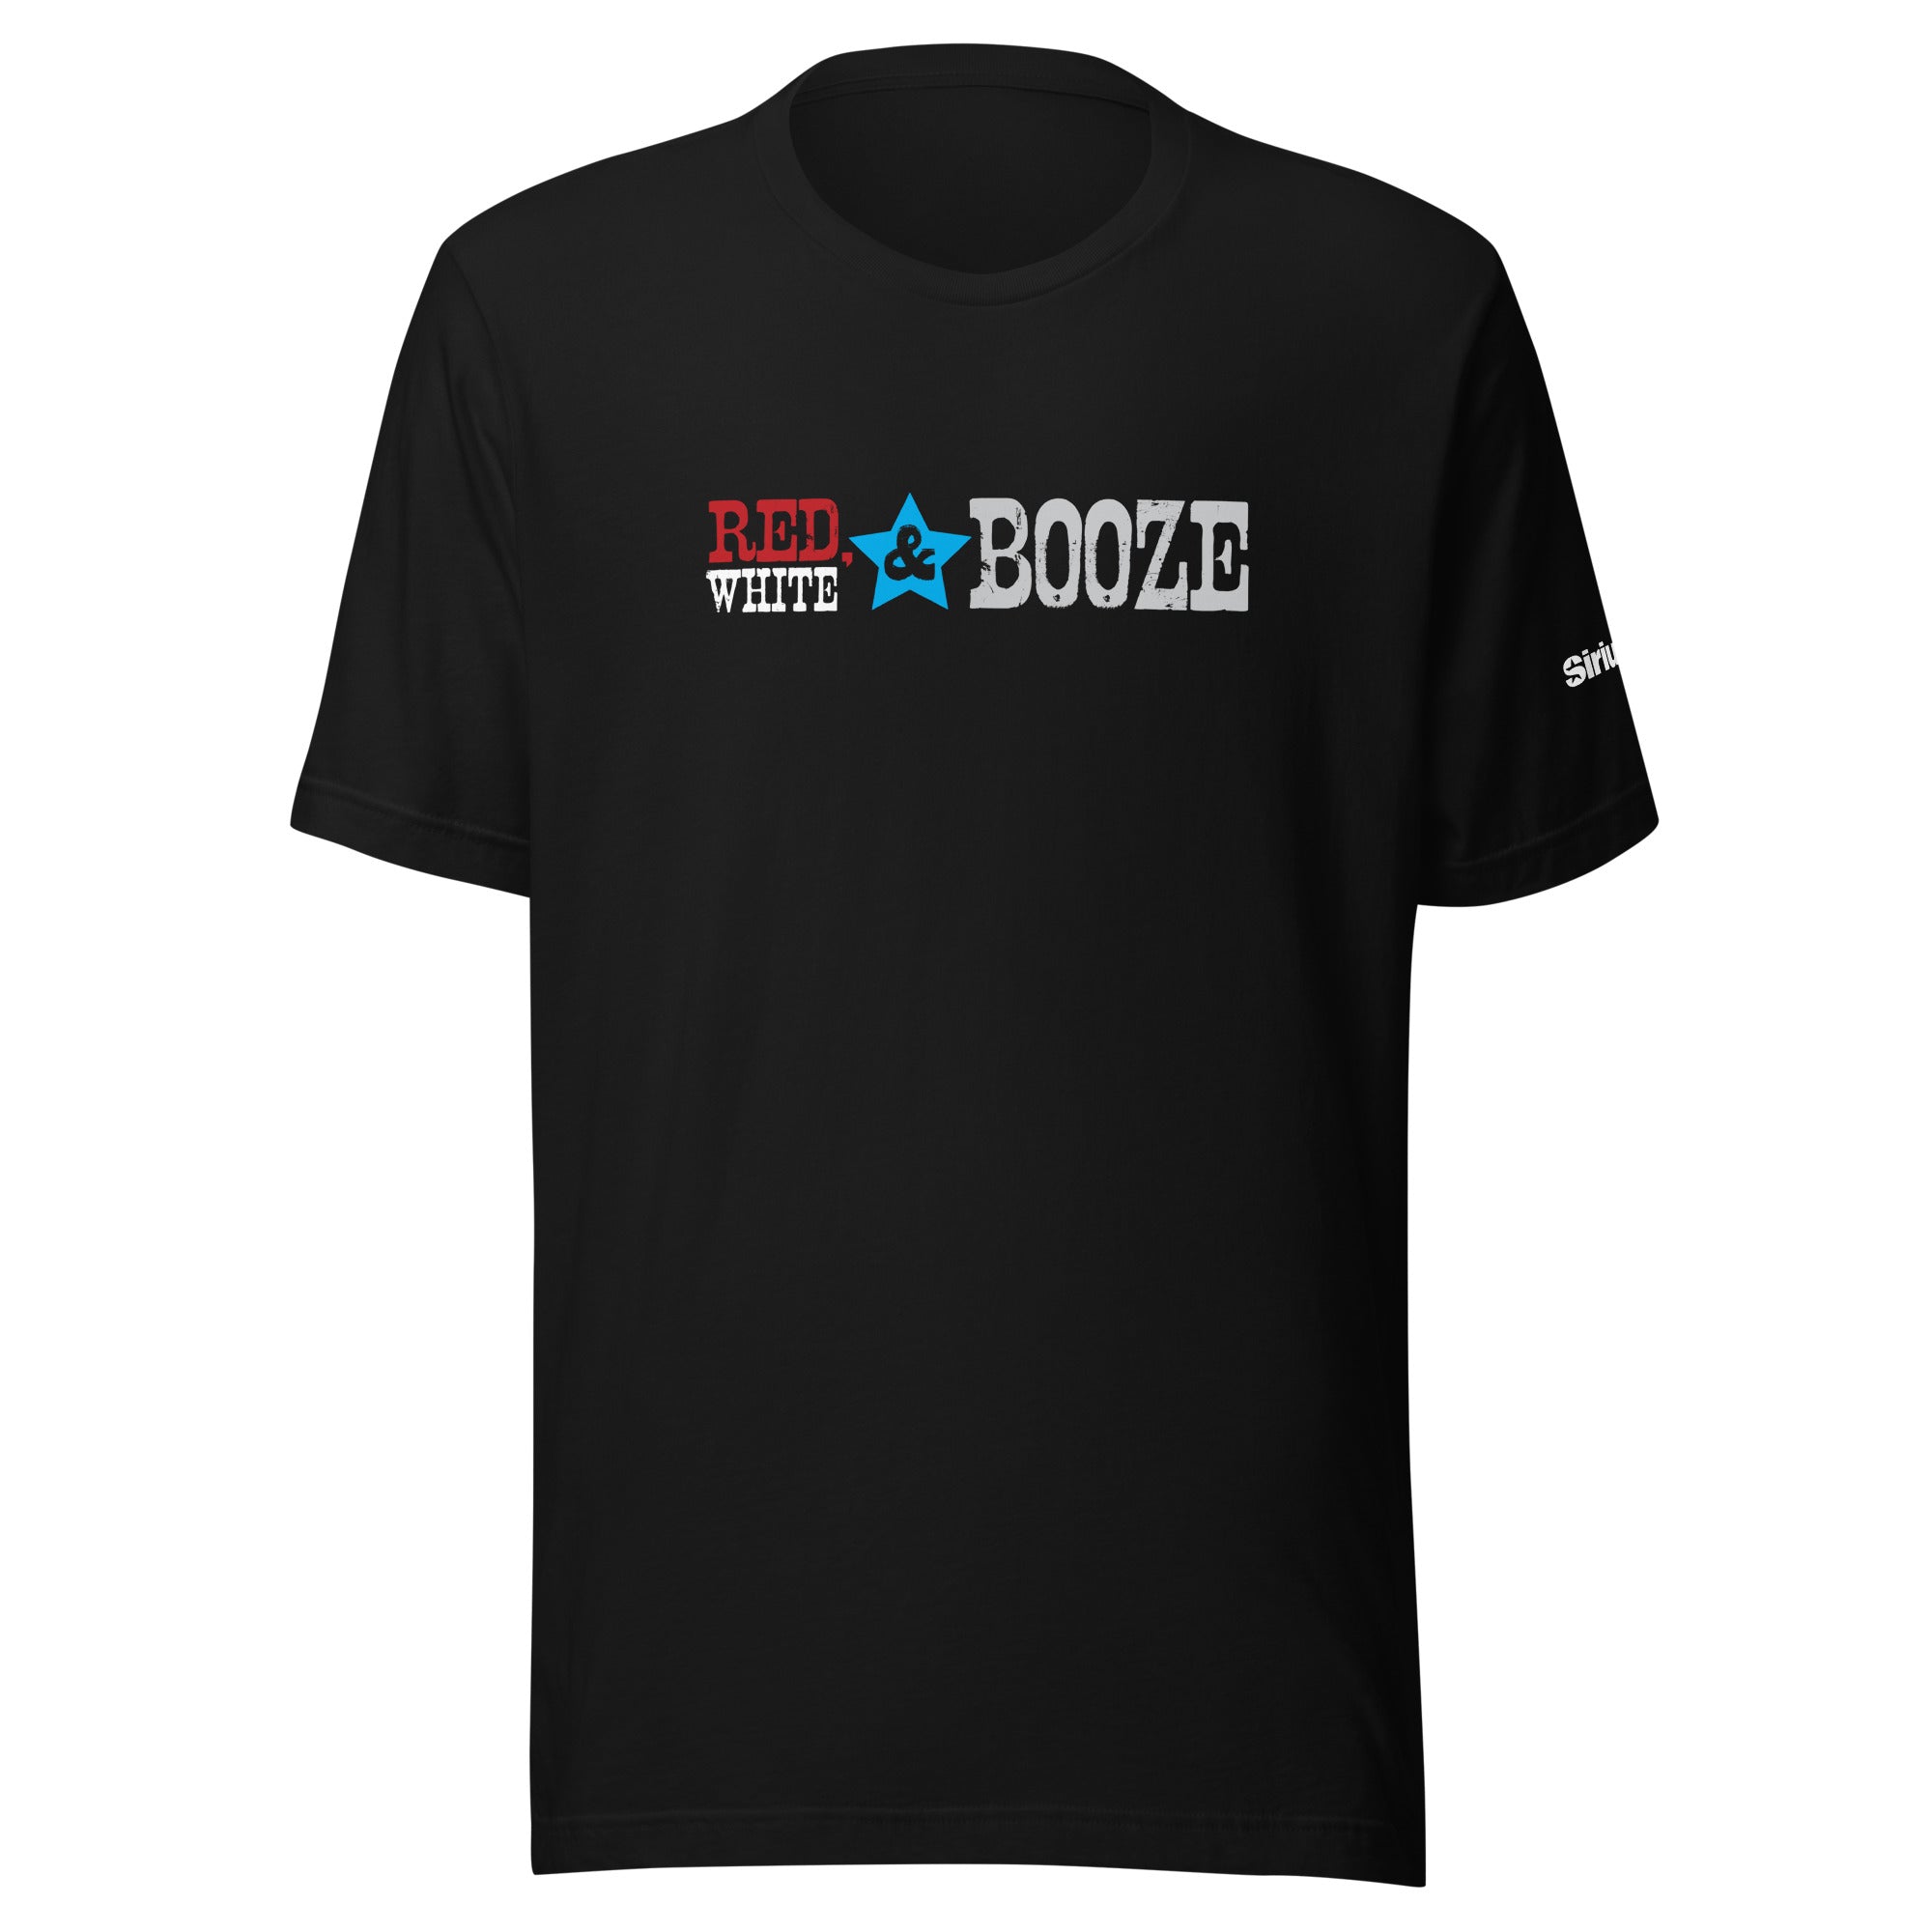 Red White & Booze: T-shirt (Black)